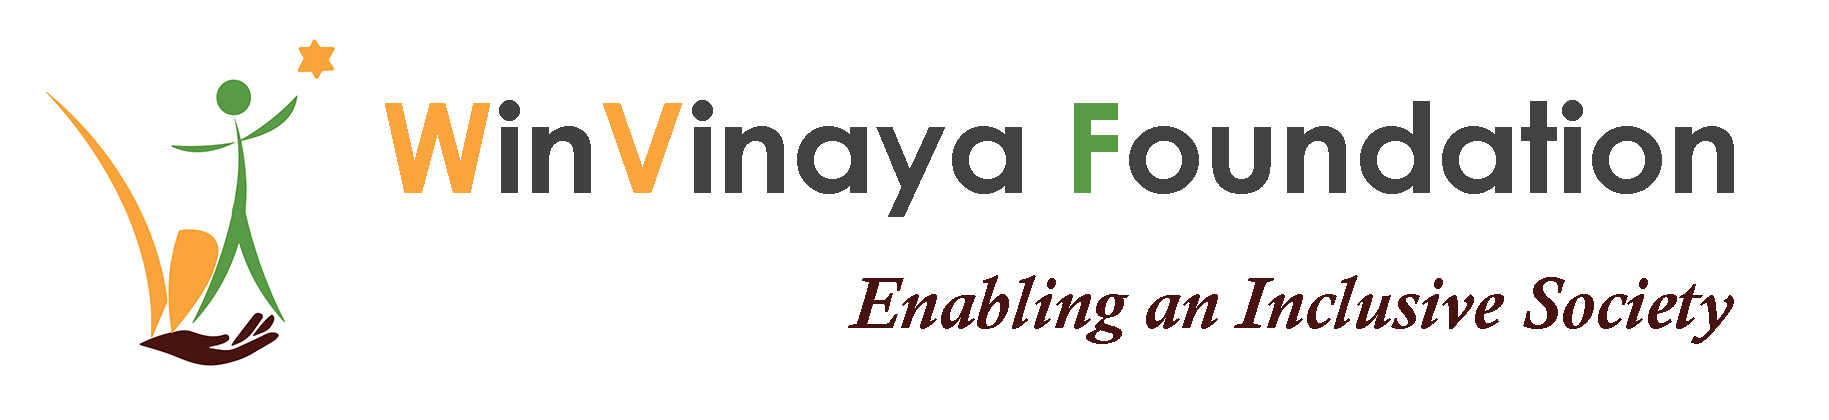 Winvinaya Foundation logo